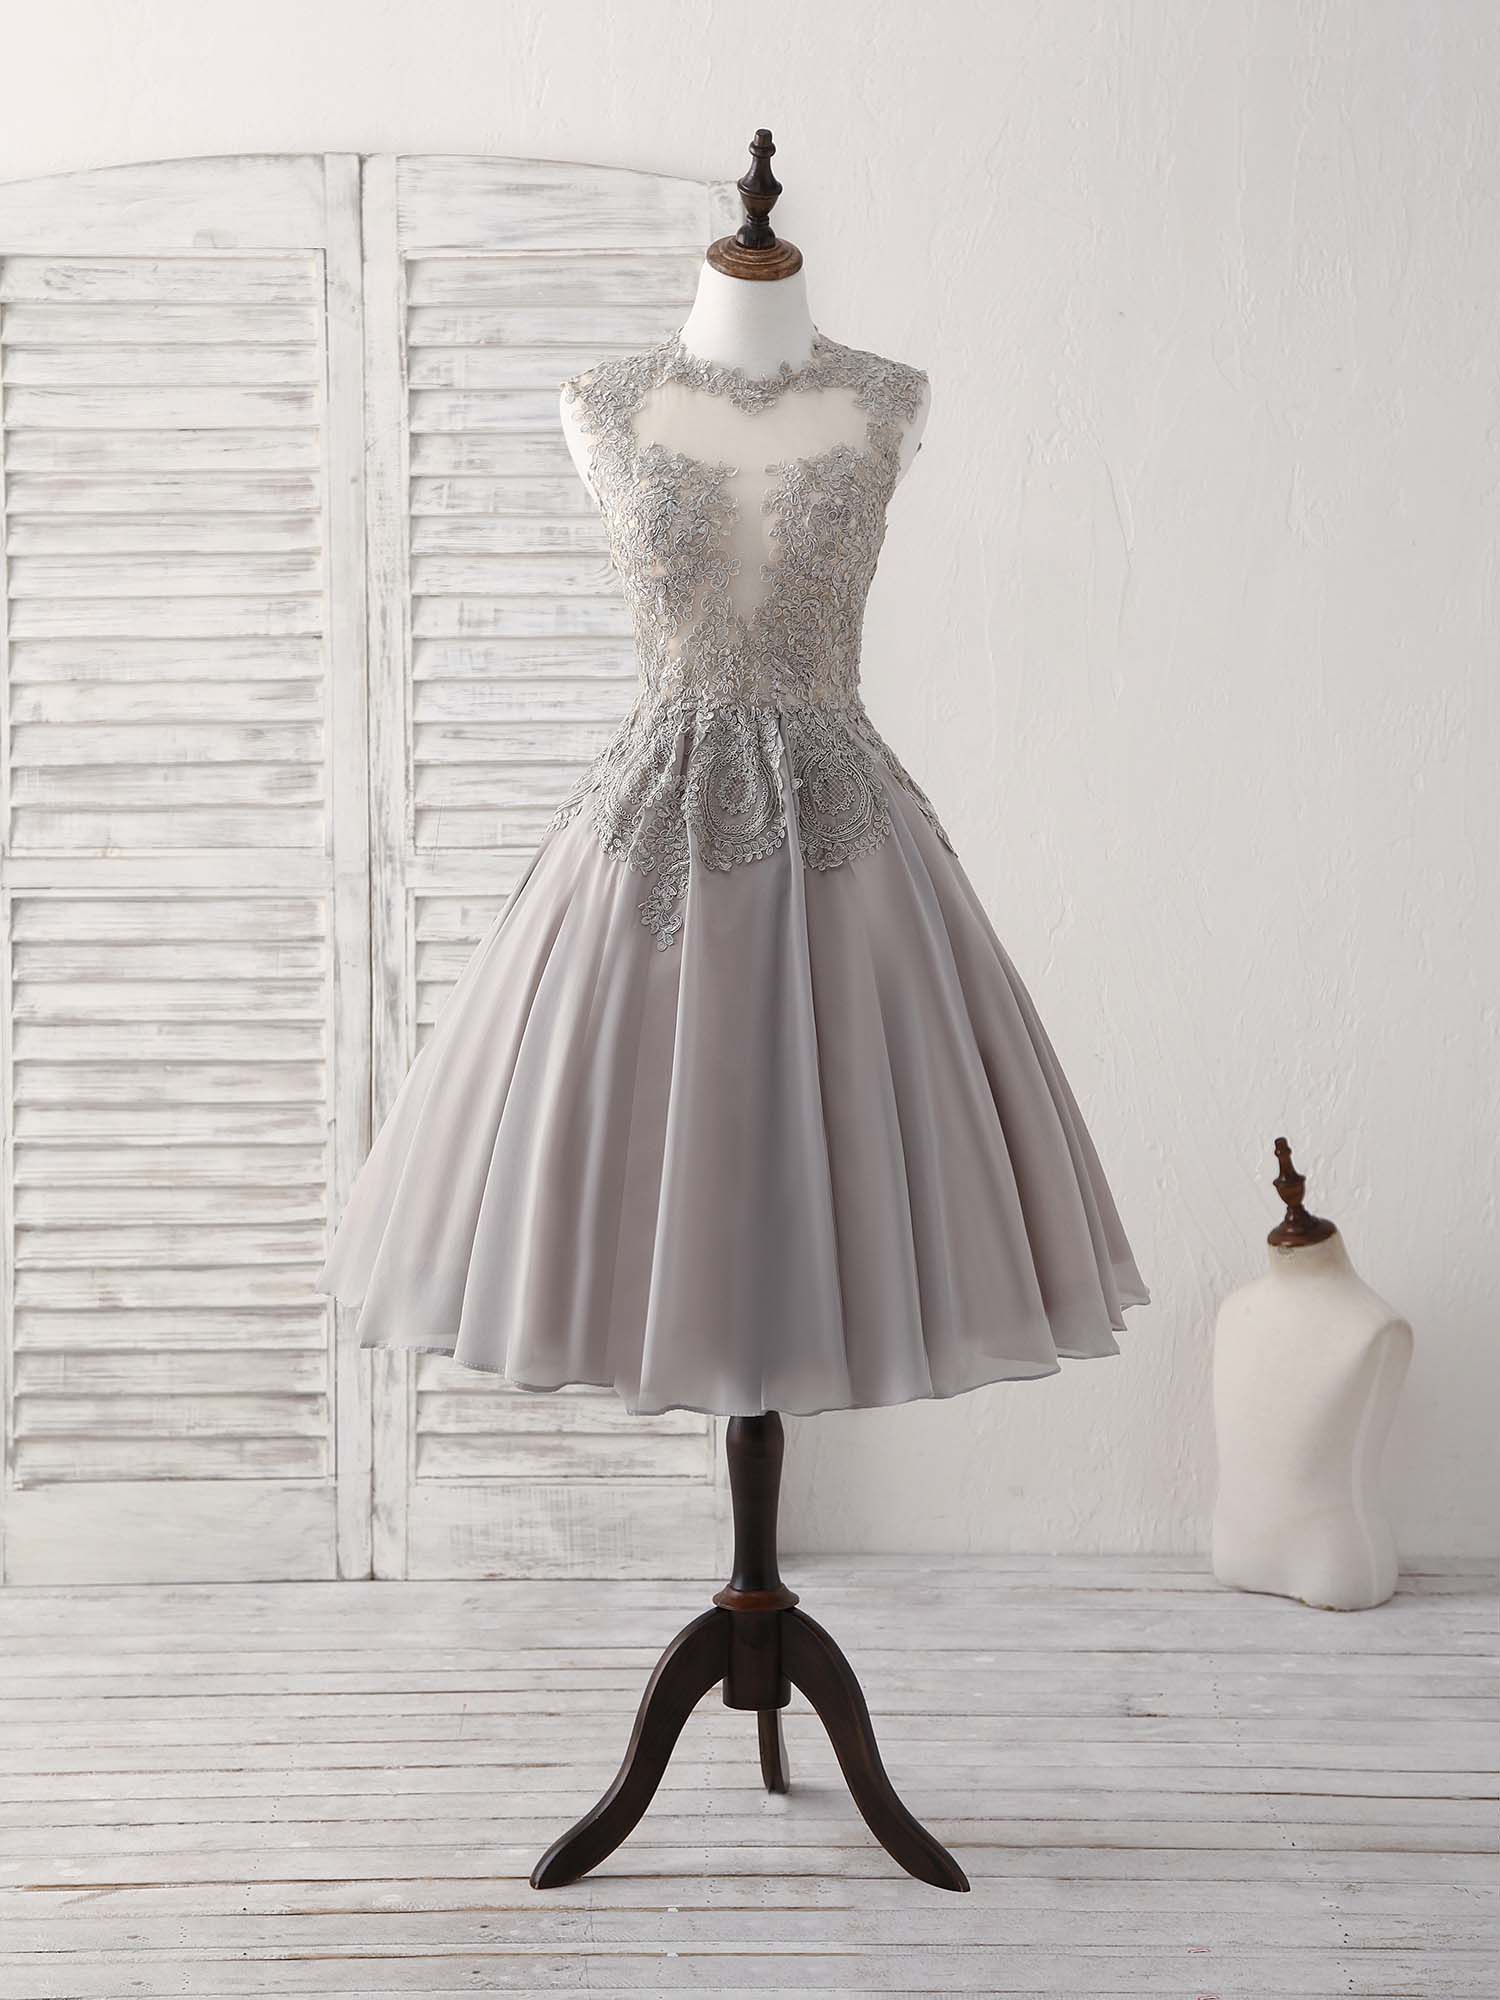 Gray High Neck Lace Chiffon Short Corset Prom Dress Gray Corset Bridesmaid Dress outfit, Party Dress Sale